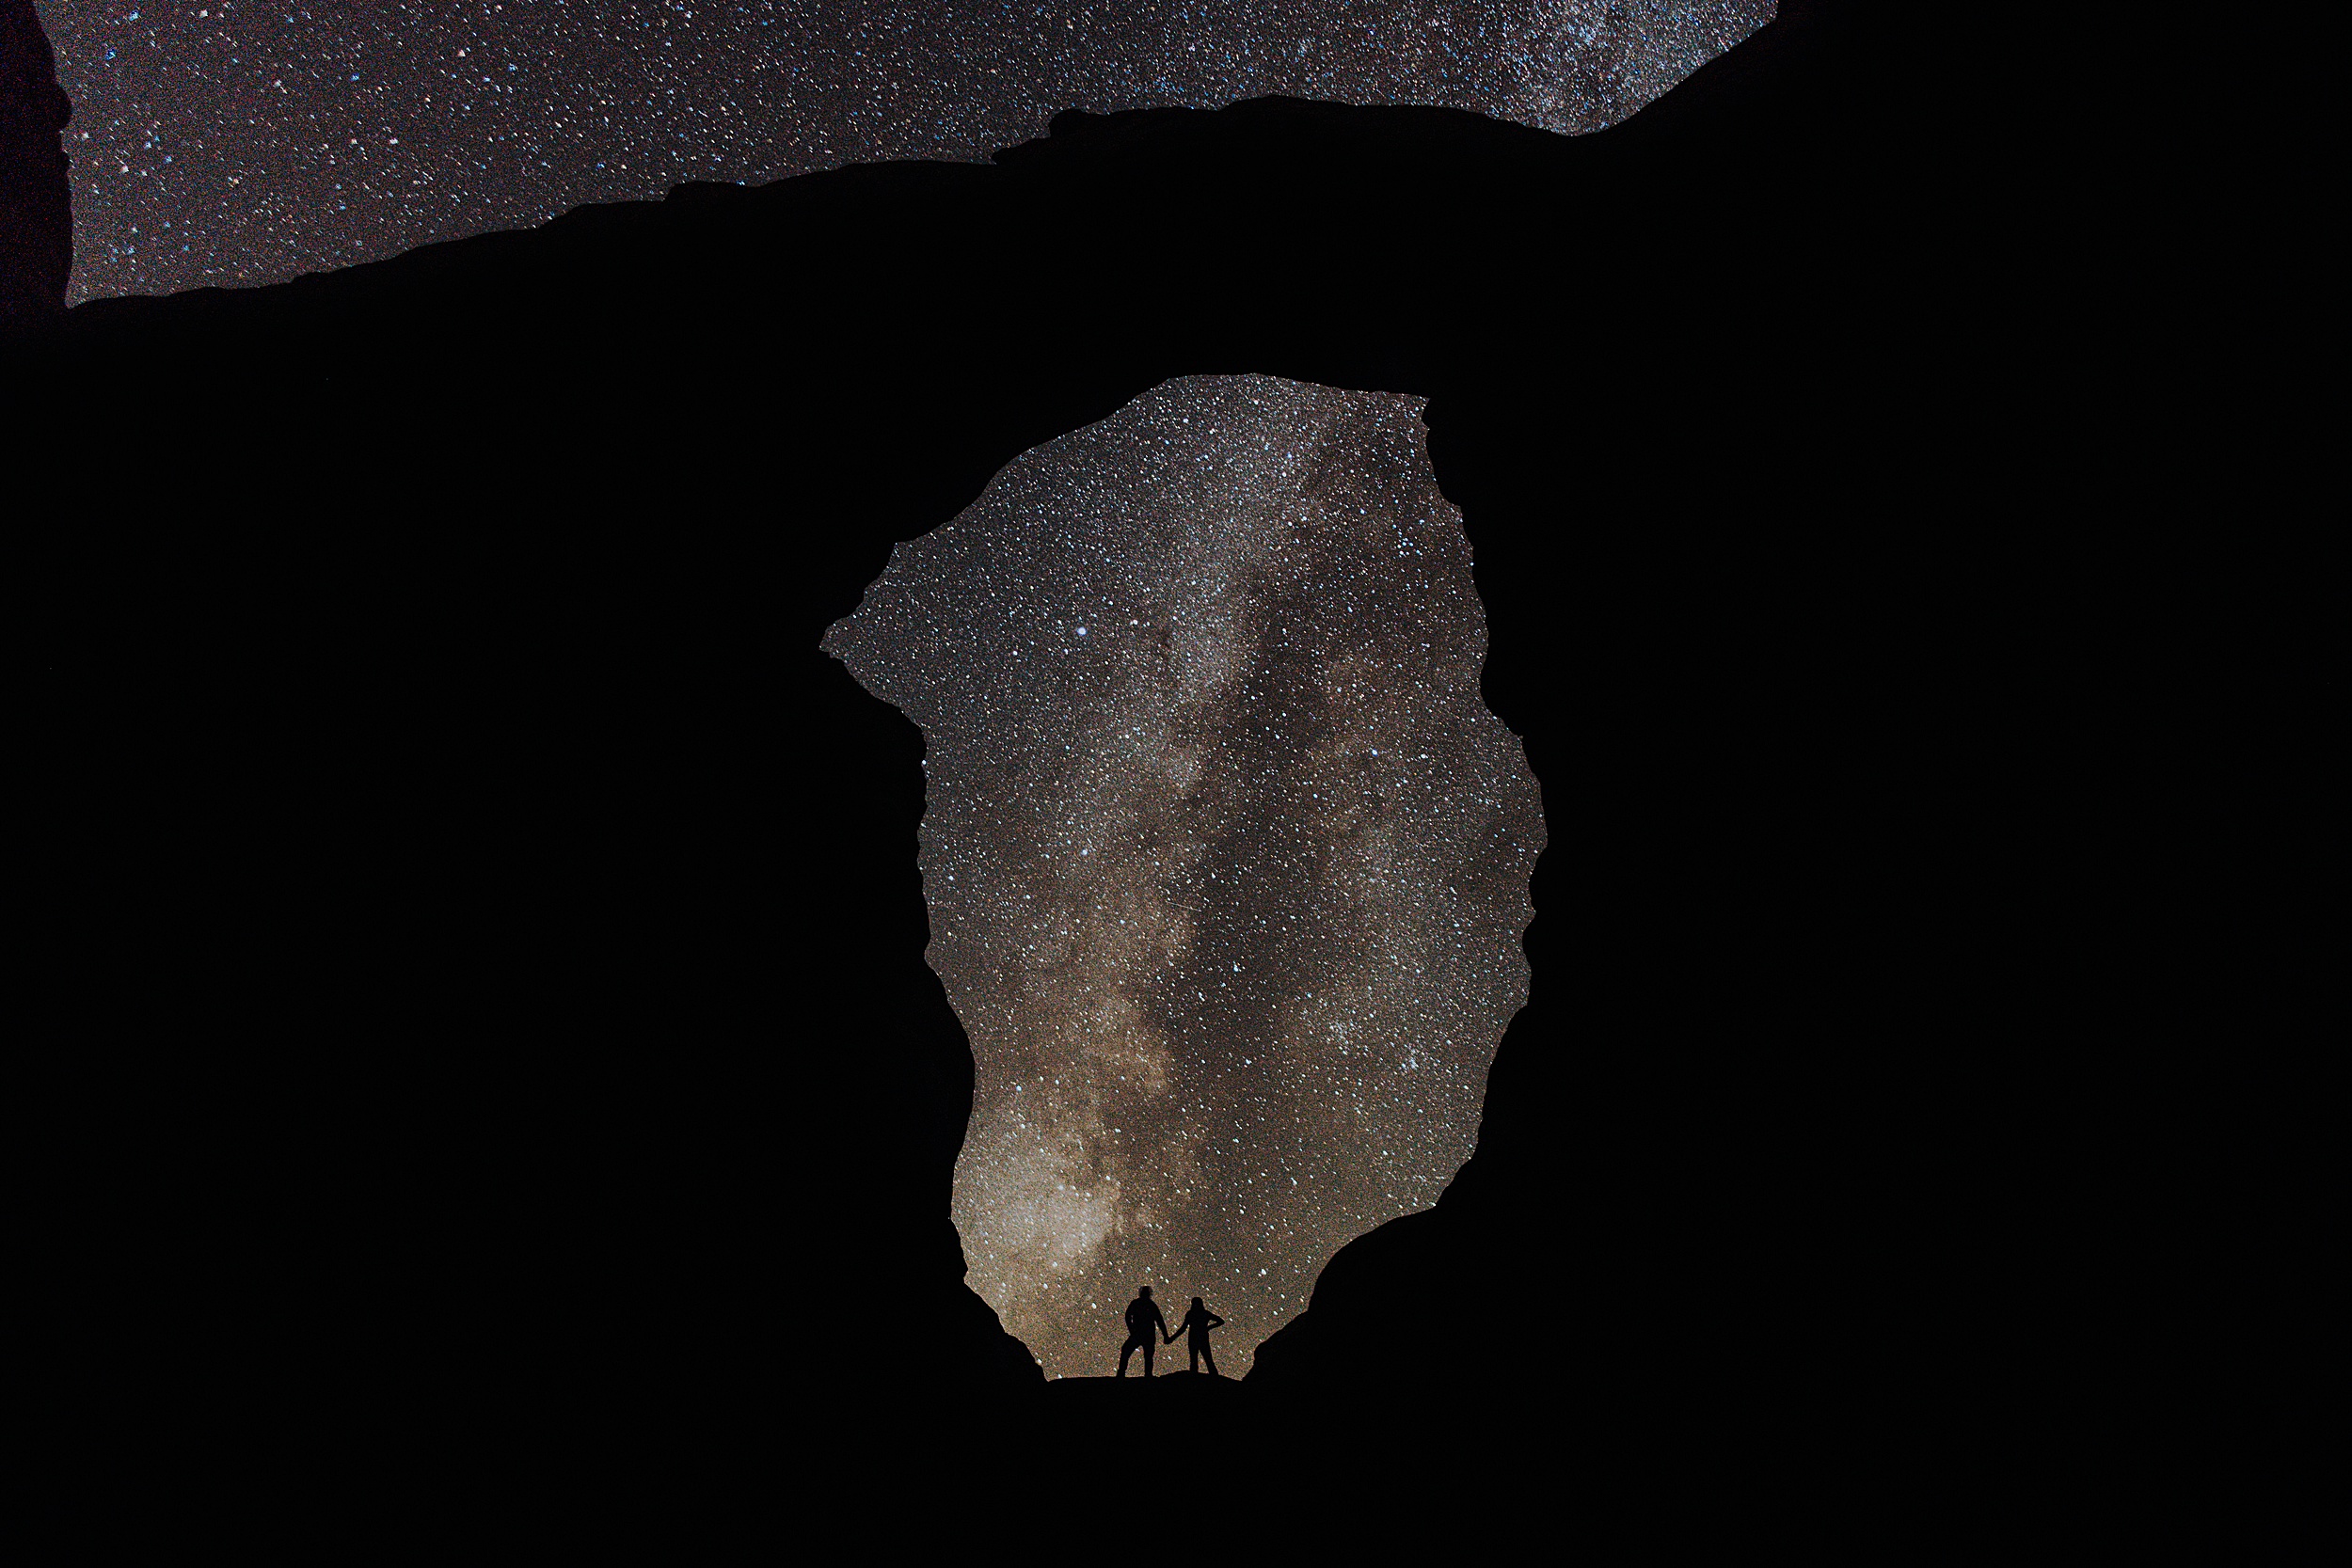 arches national park stargazing photos